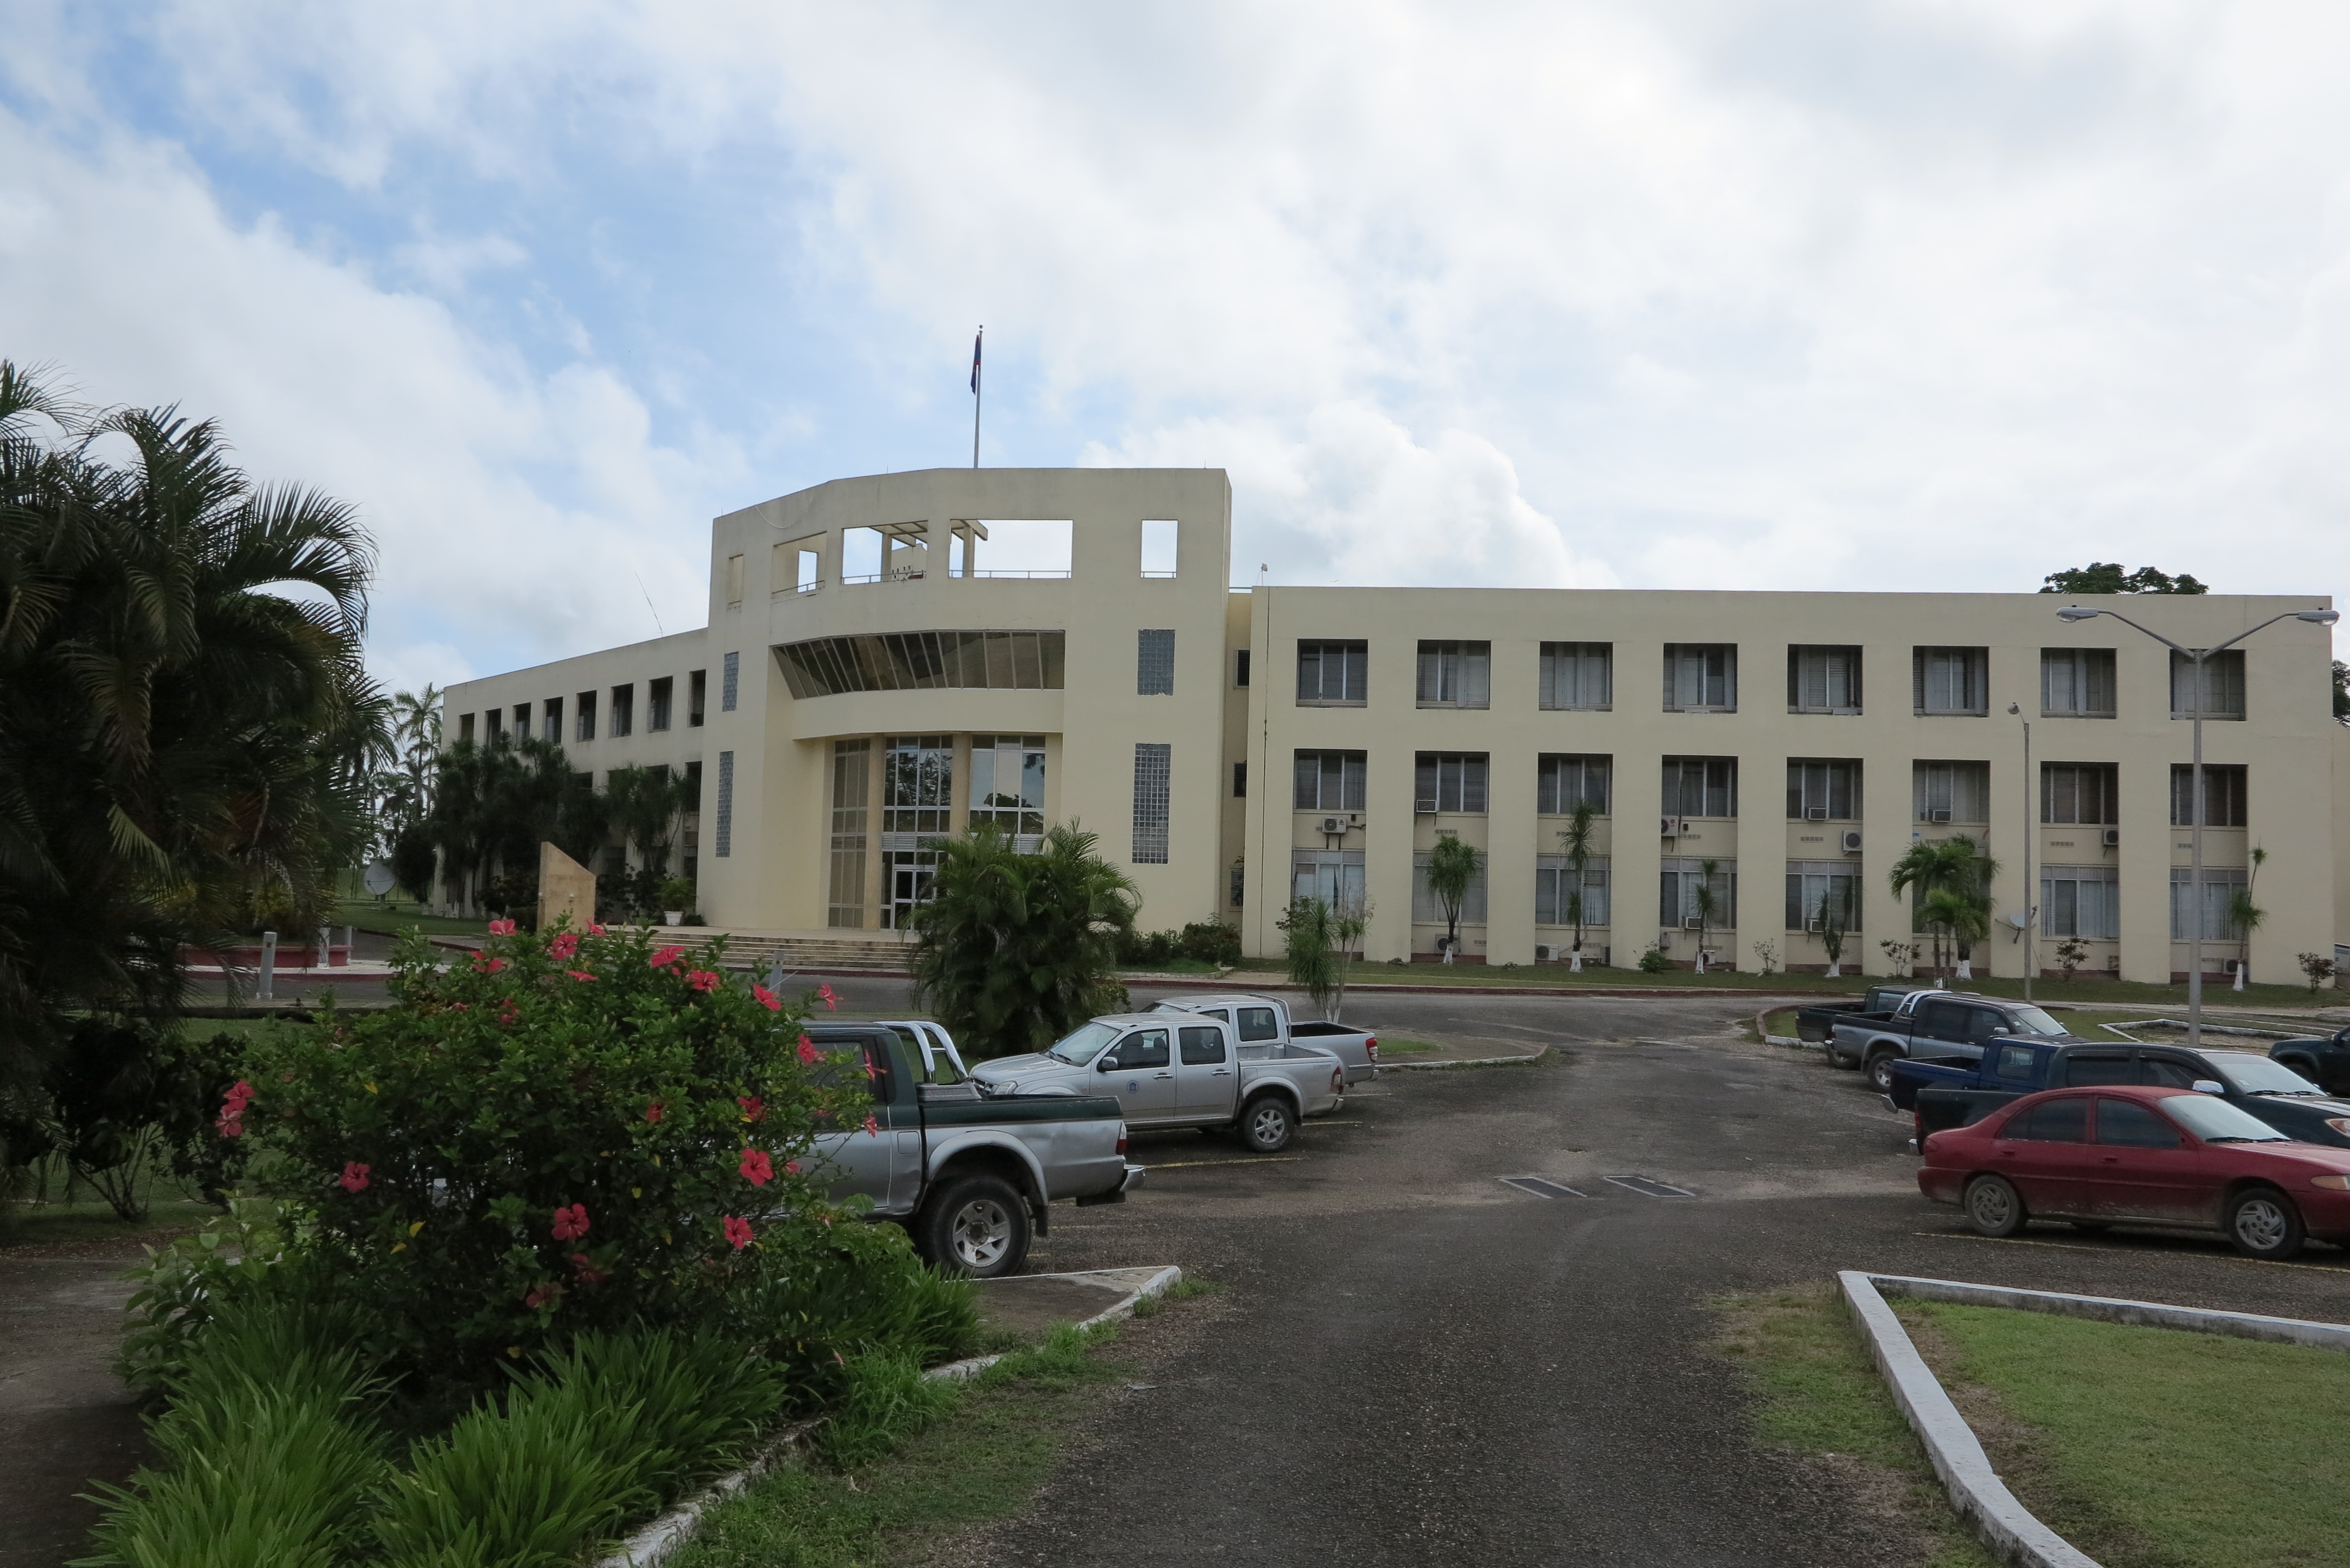 Government Belize Info Center